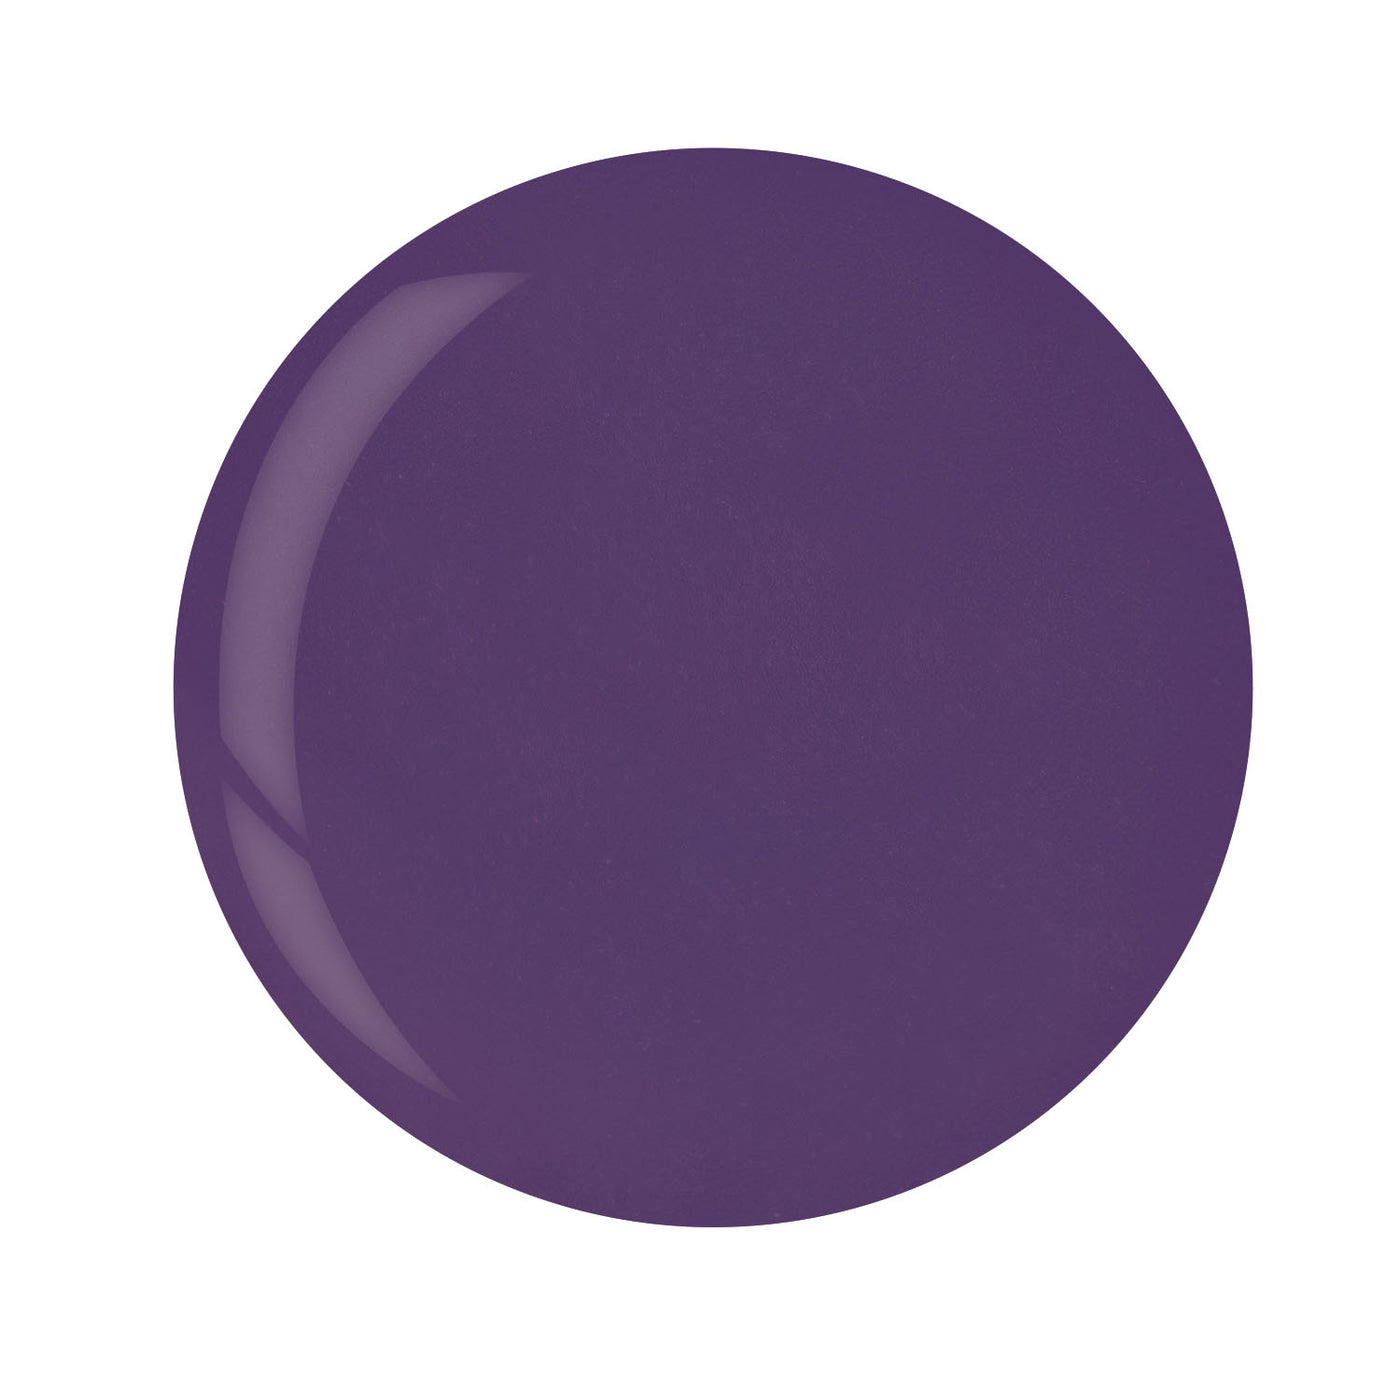 CP Dipping Powder14g - 5518-5 Bright Grape Purple